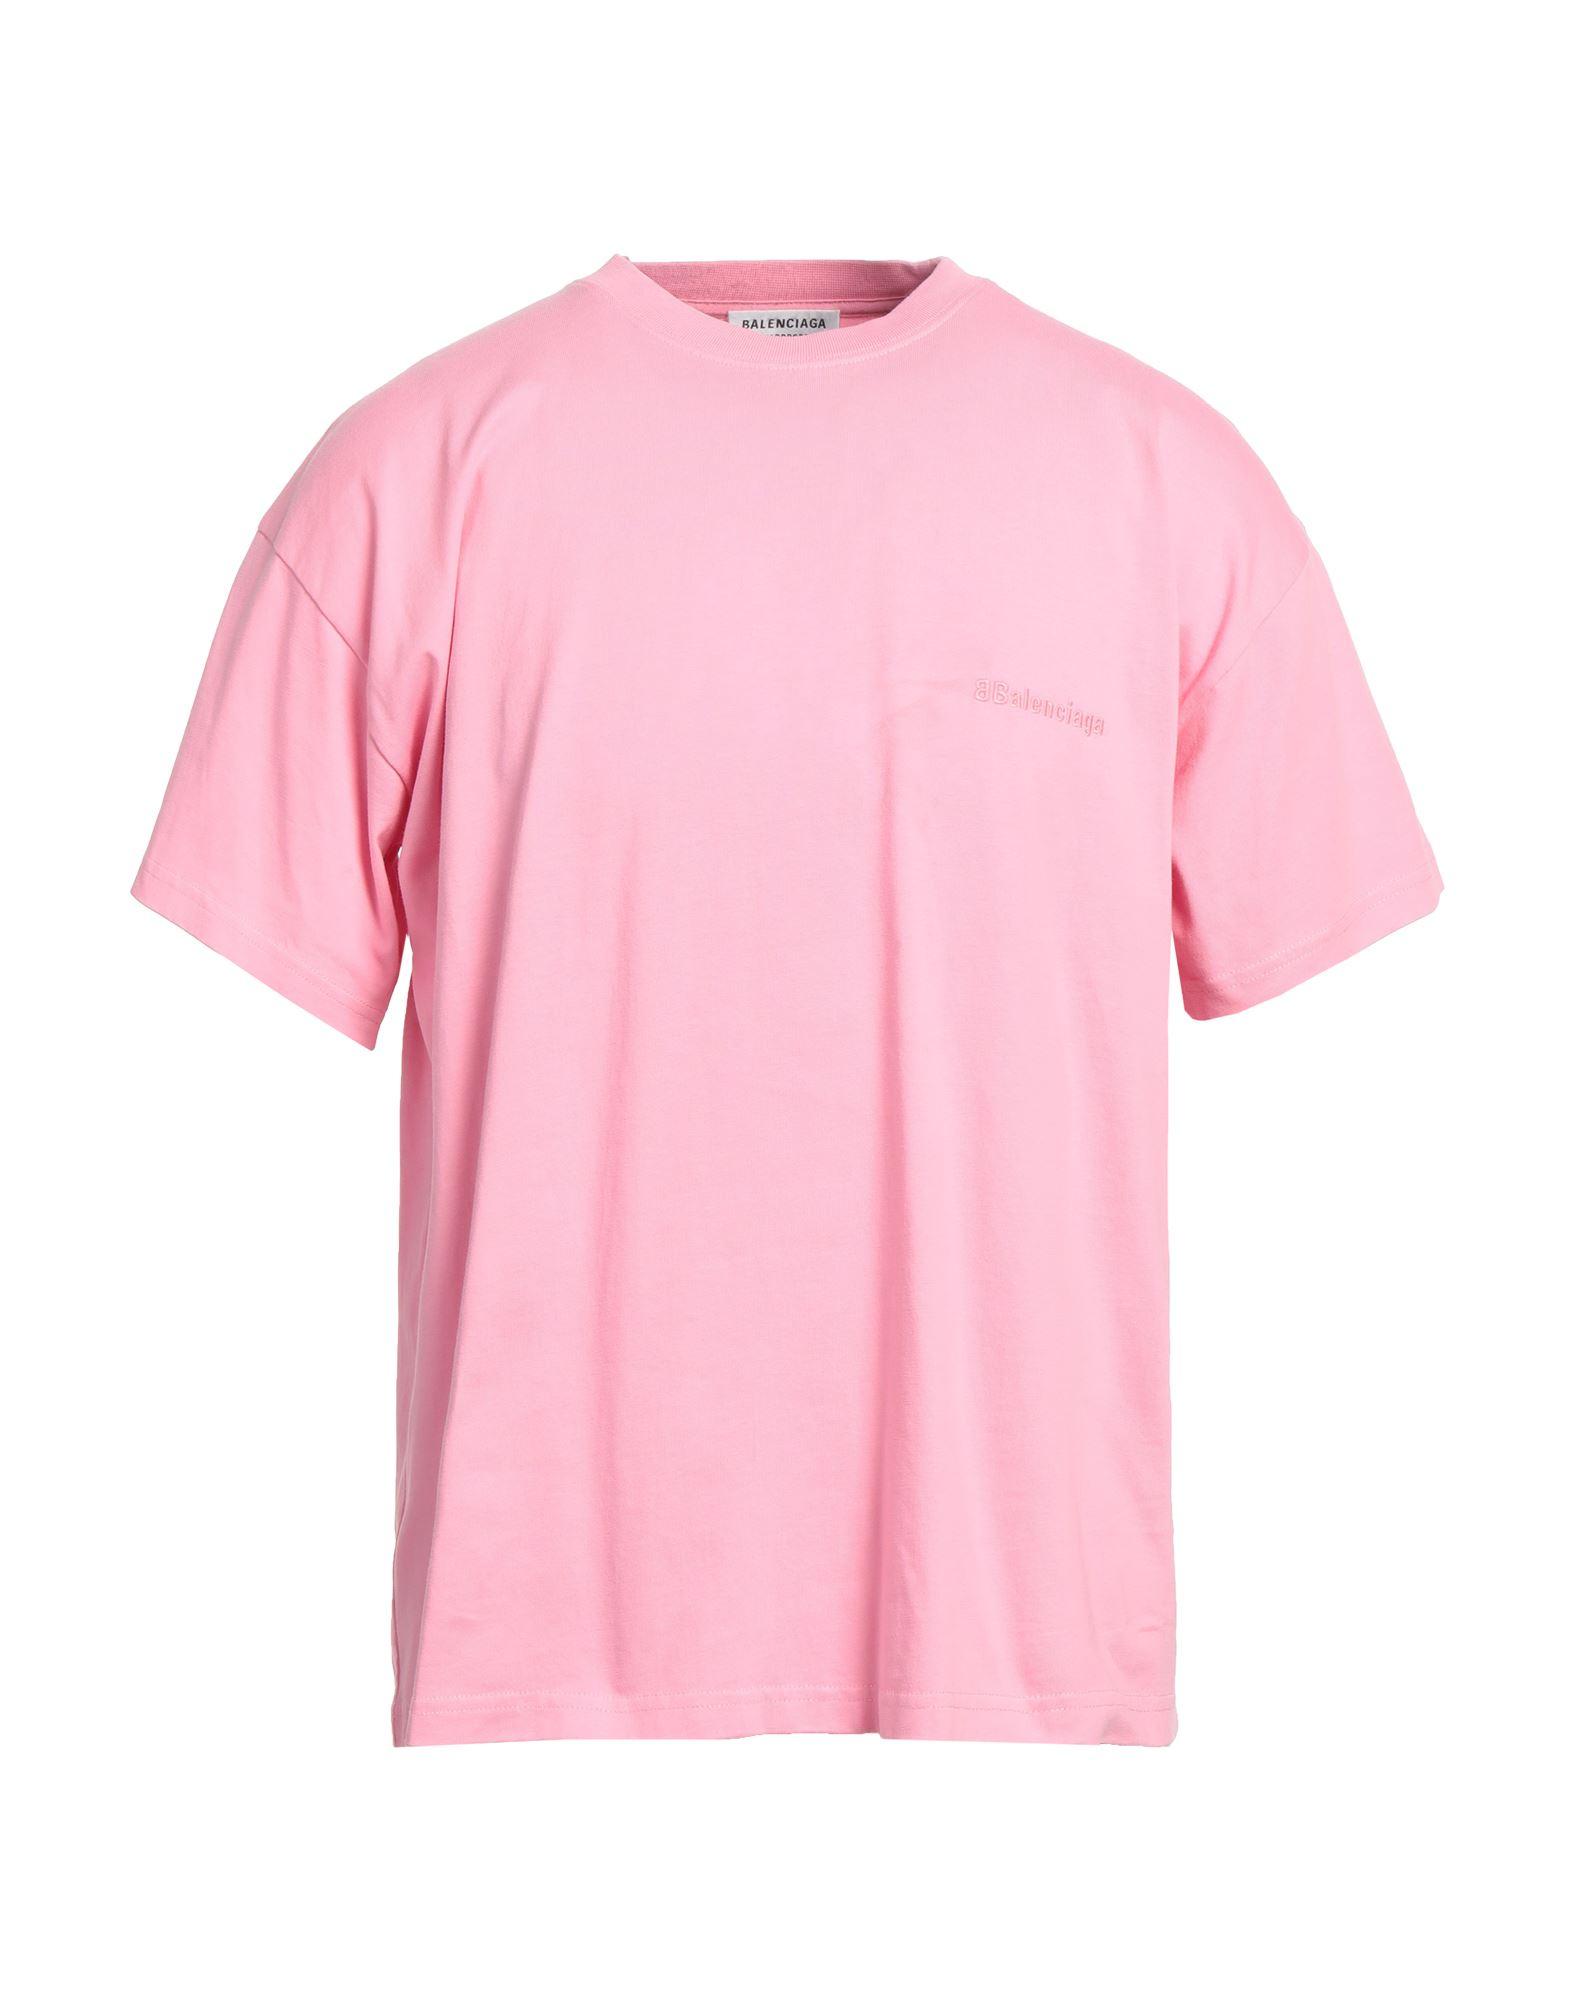 BALENCIAGA - Oversized Distressed Logo-Print Cotton-Jersey T-Shirt - Pink  Balenciaga